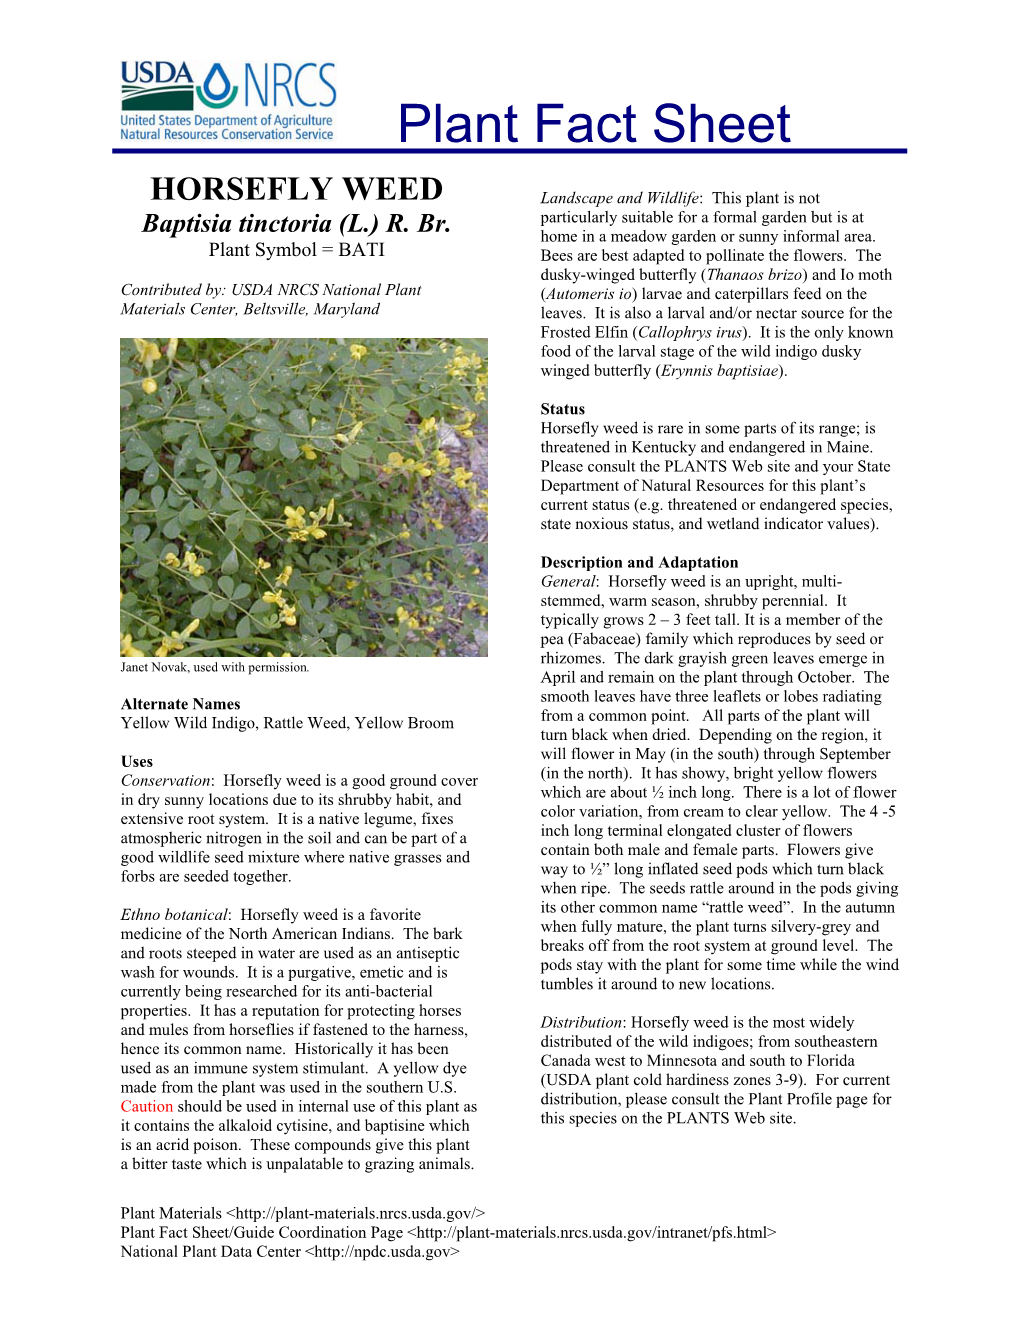 Horsefly Weed (Baptisia Tinctoria) Plant Fact Sheet